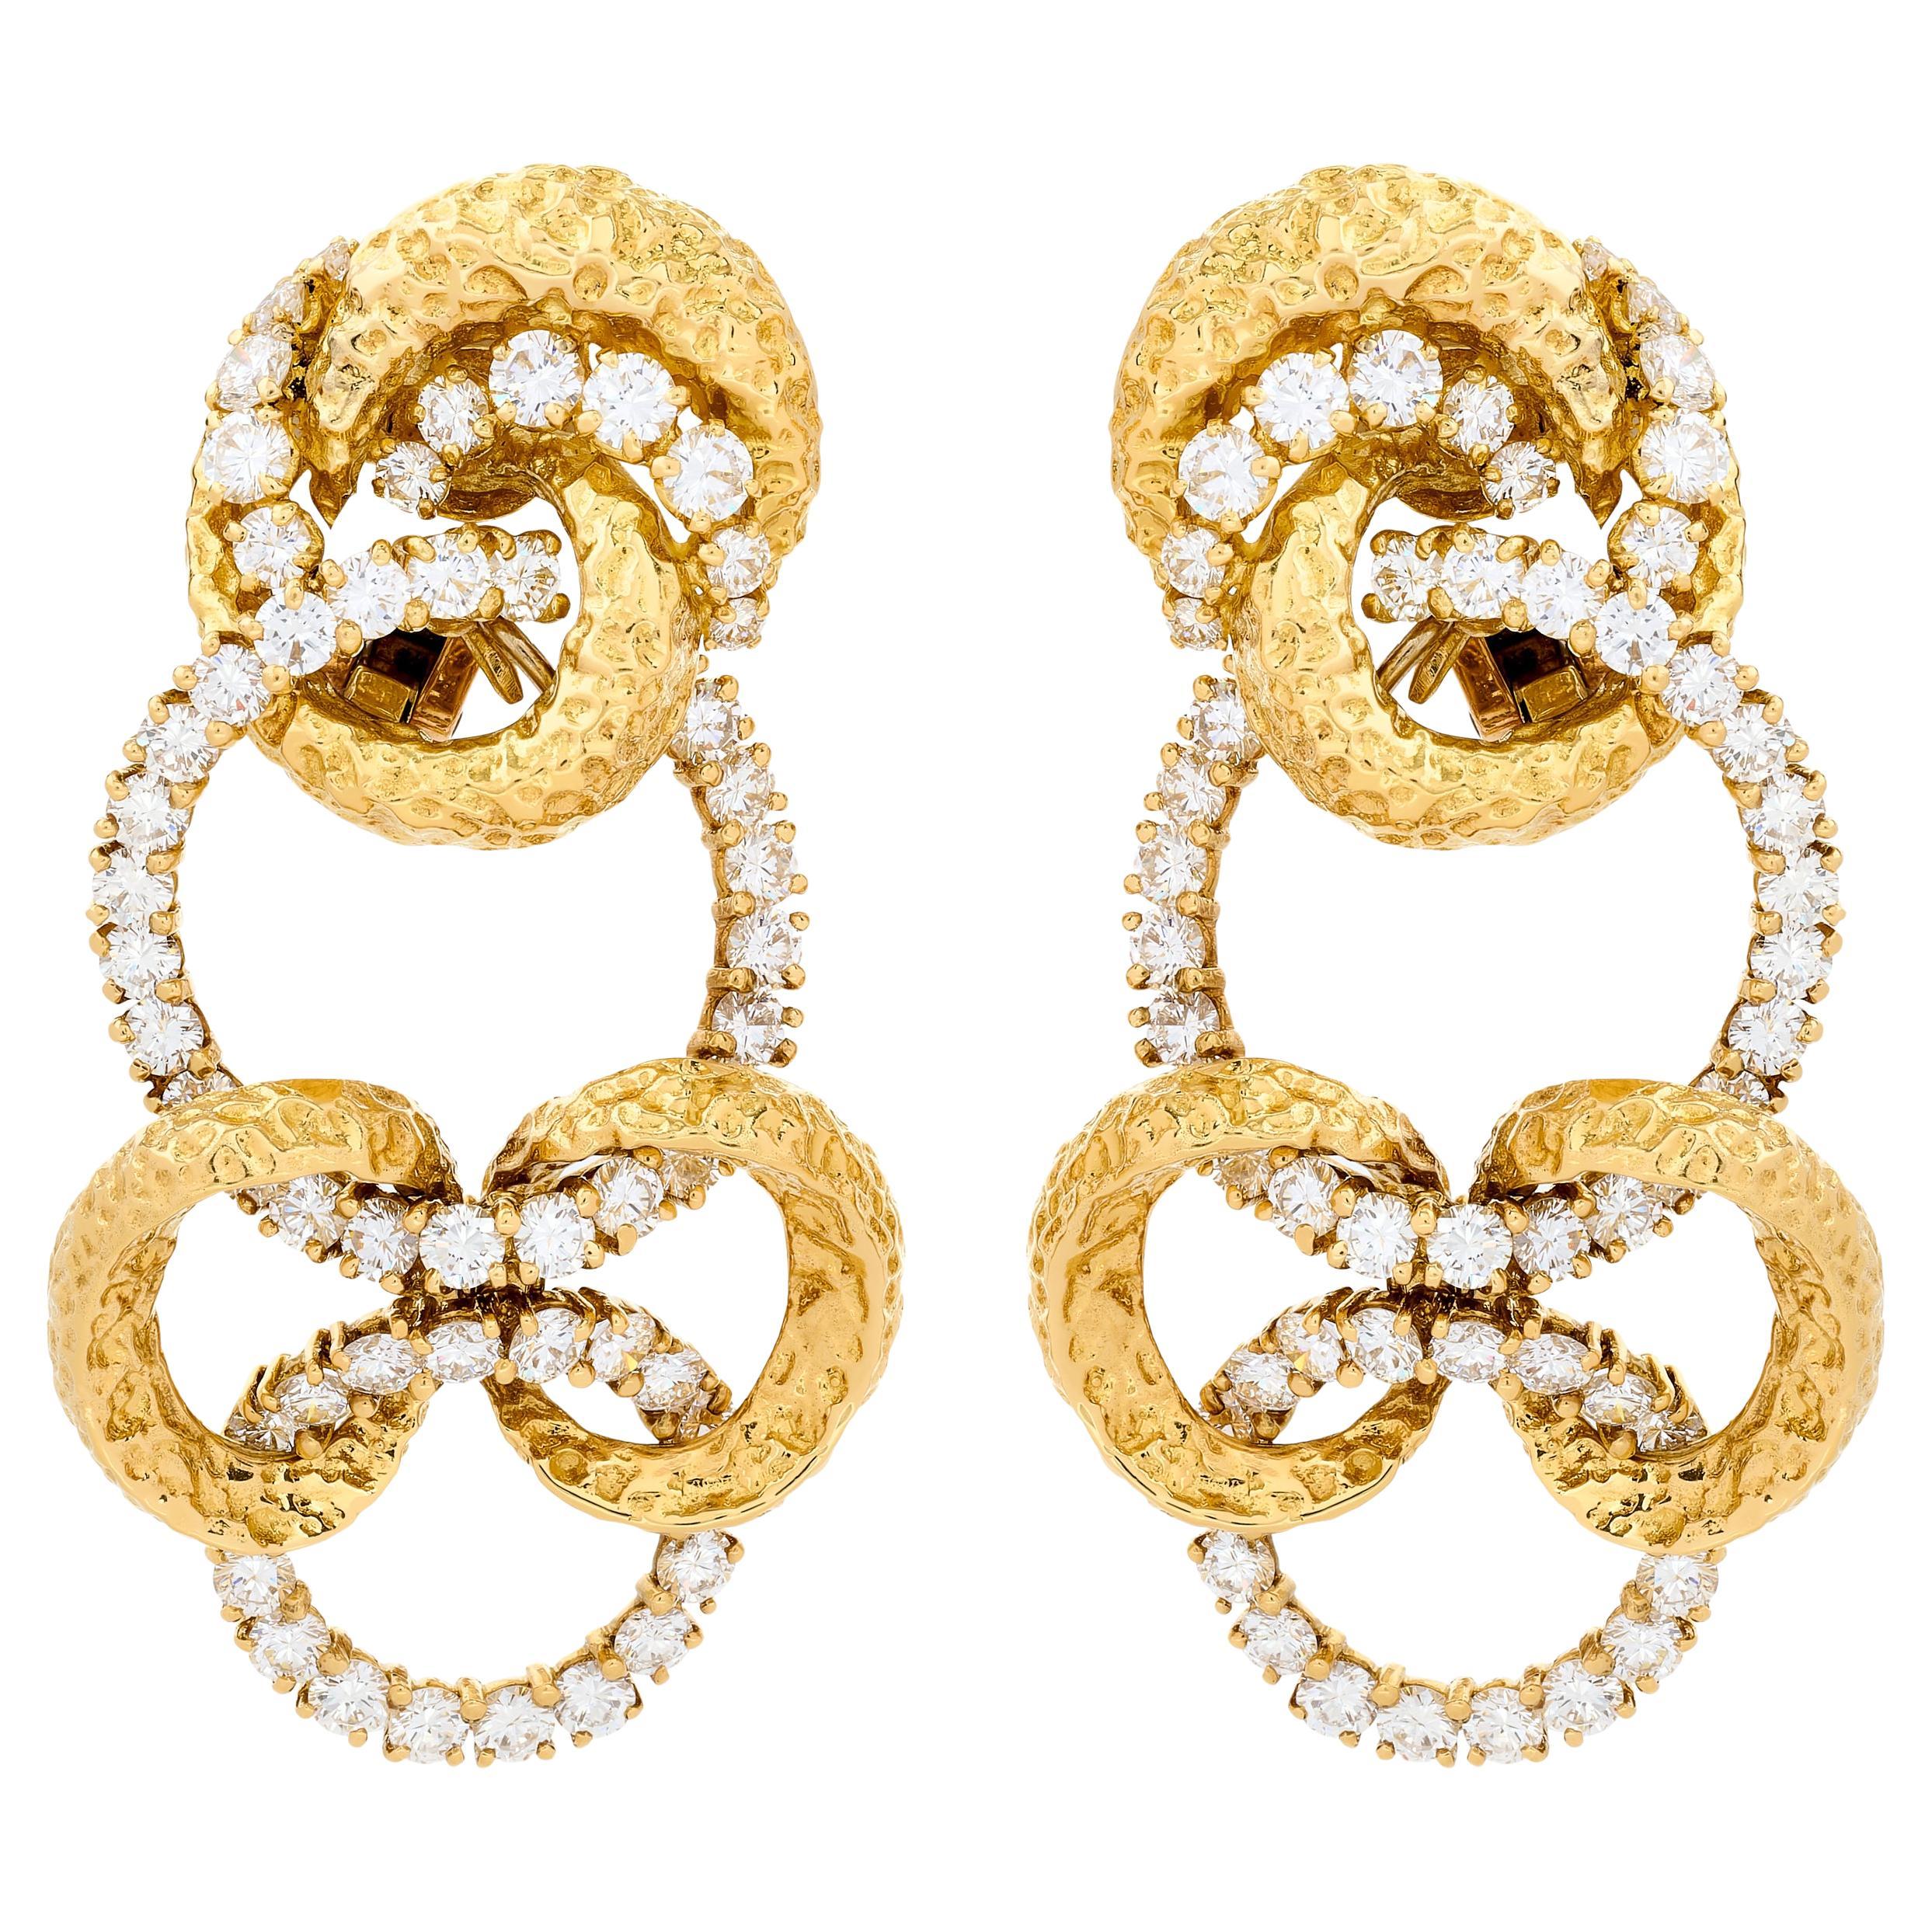 M. Gérard 18K Yellow Gold Diamond Link with Detachable Dangle Earrings